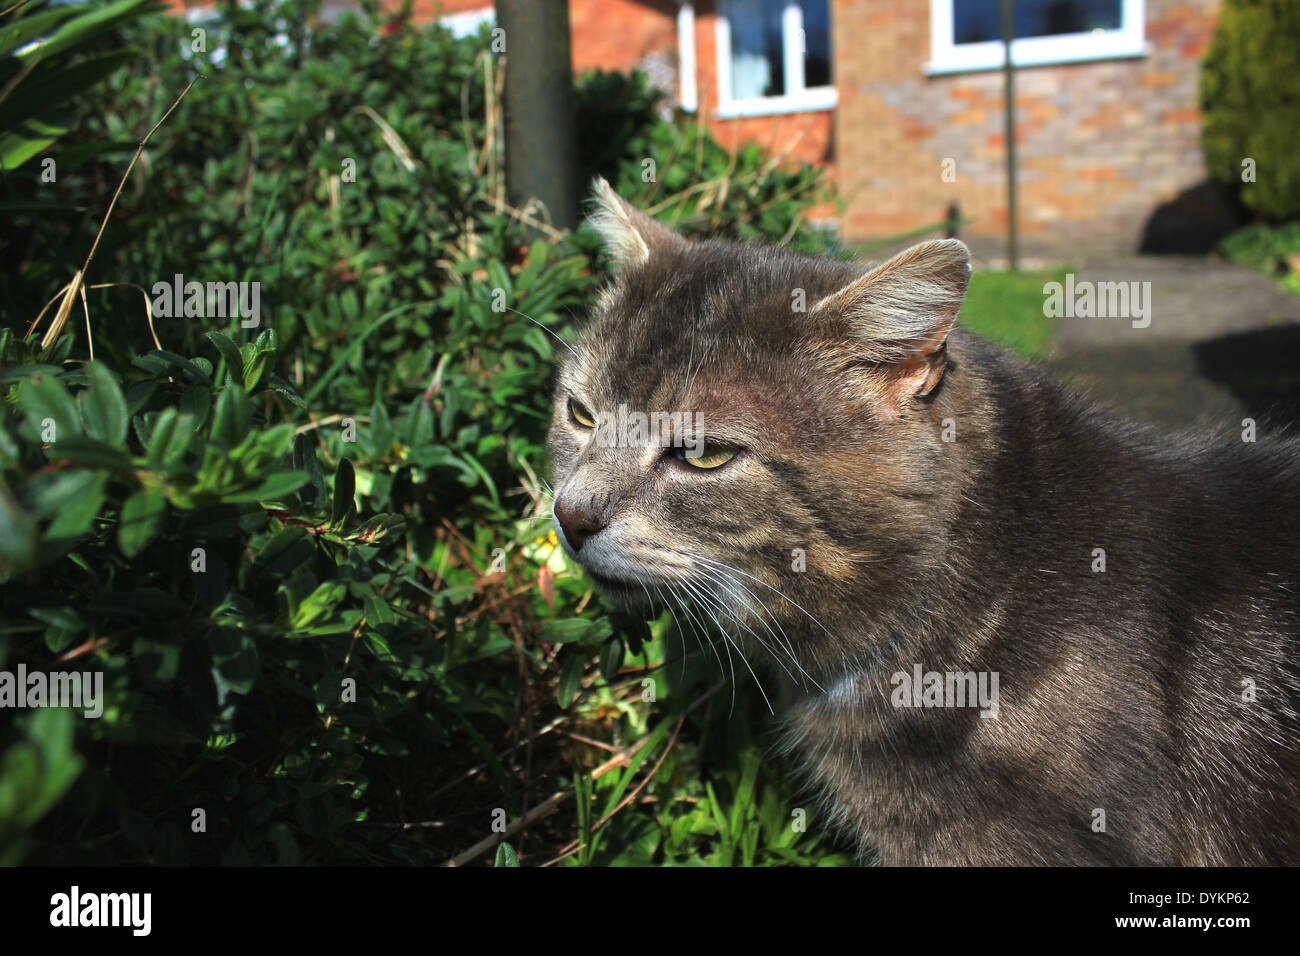 Tabby cat sniffing pianta da giardino percorso Foto Stock